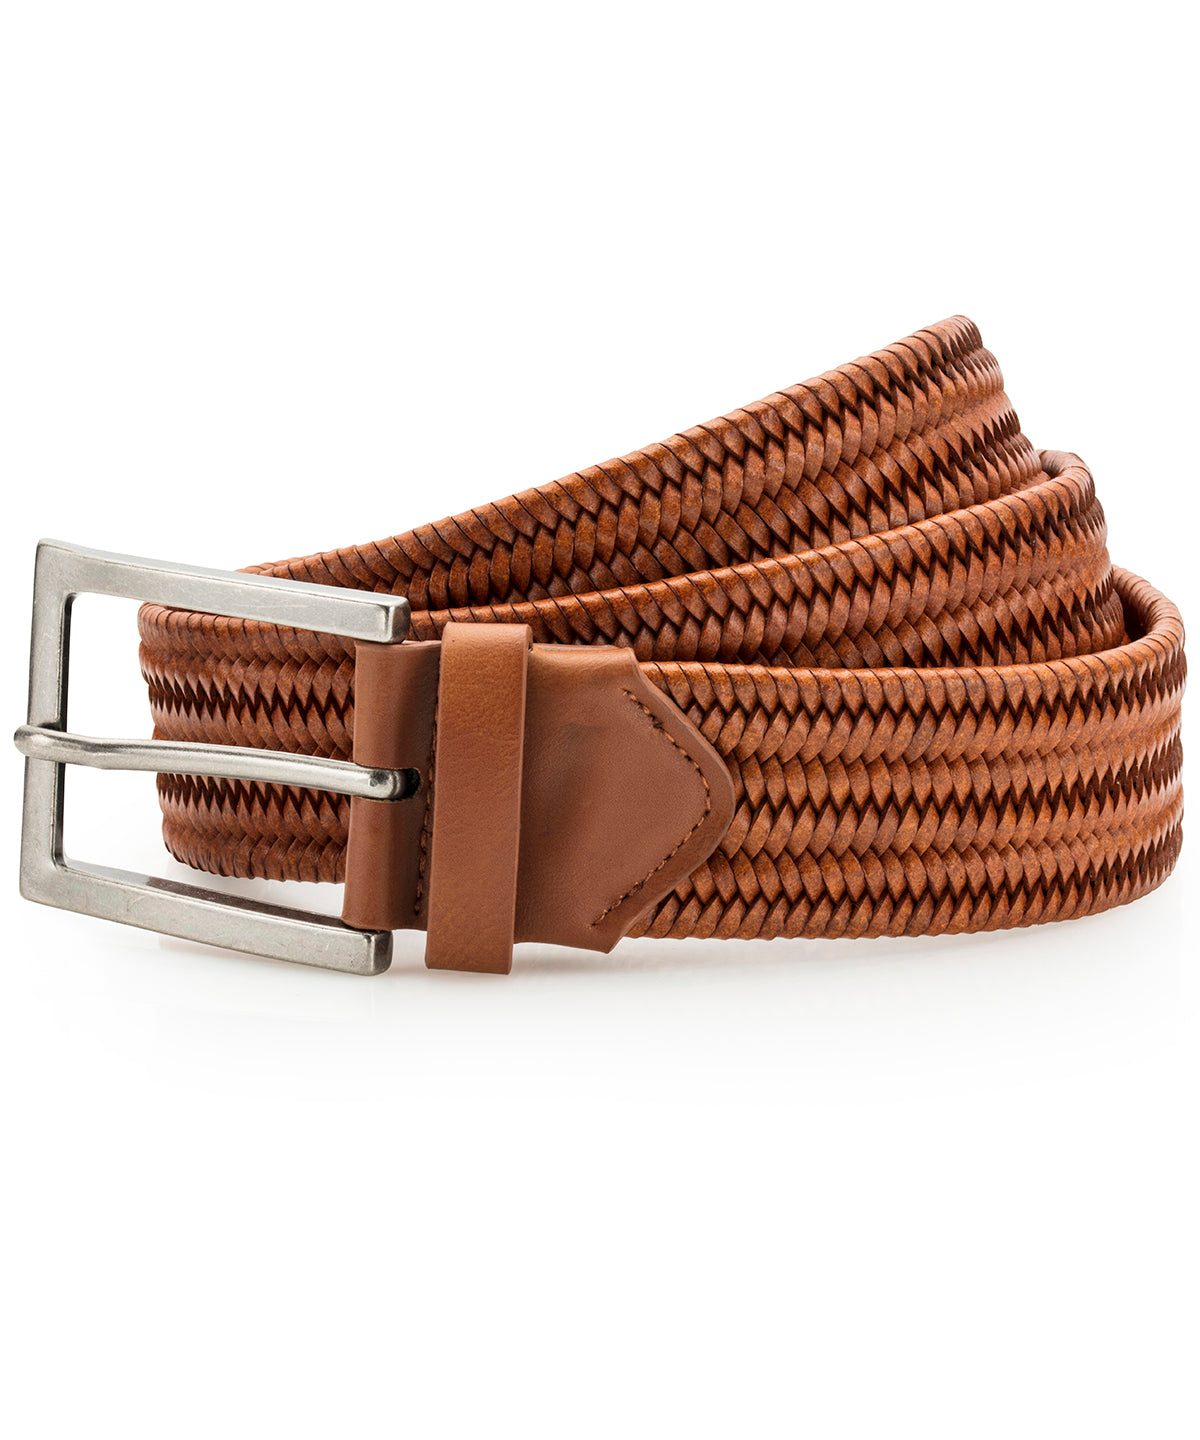 Leather braid belt